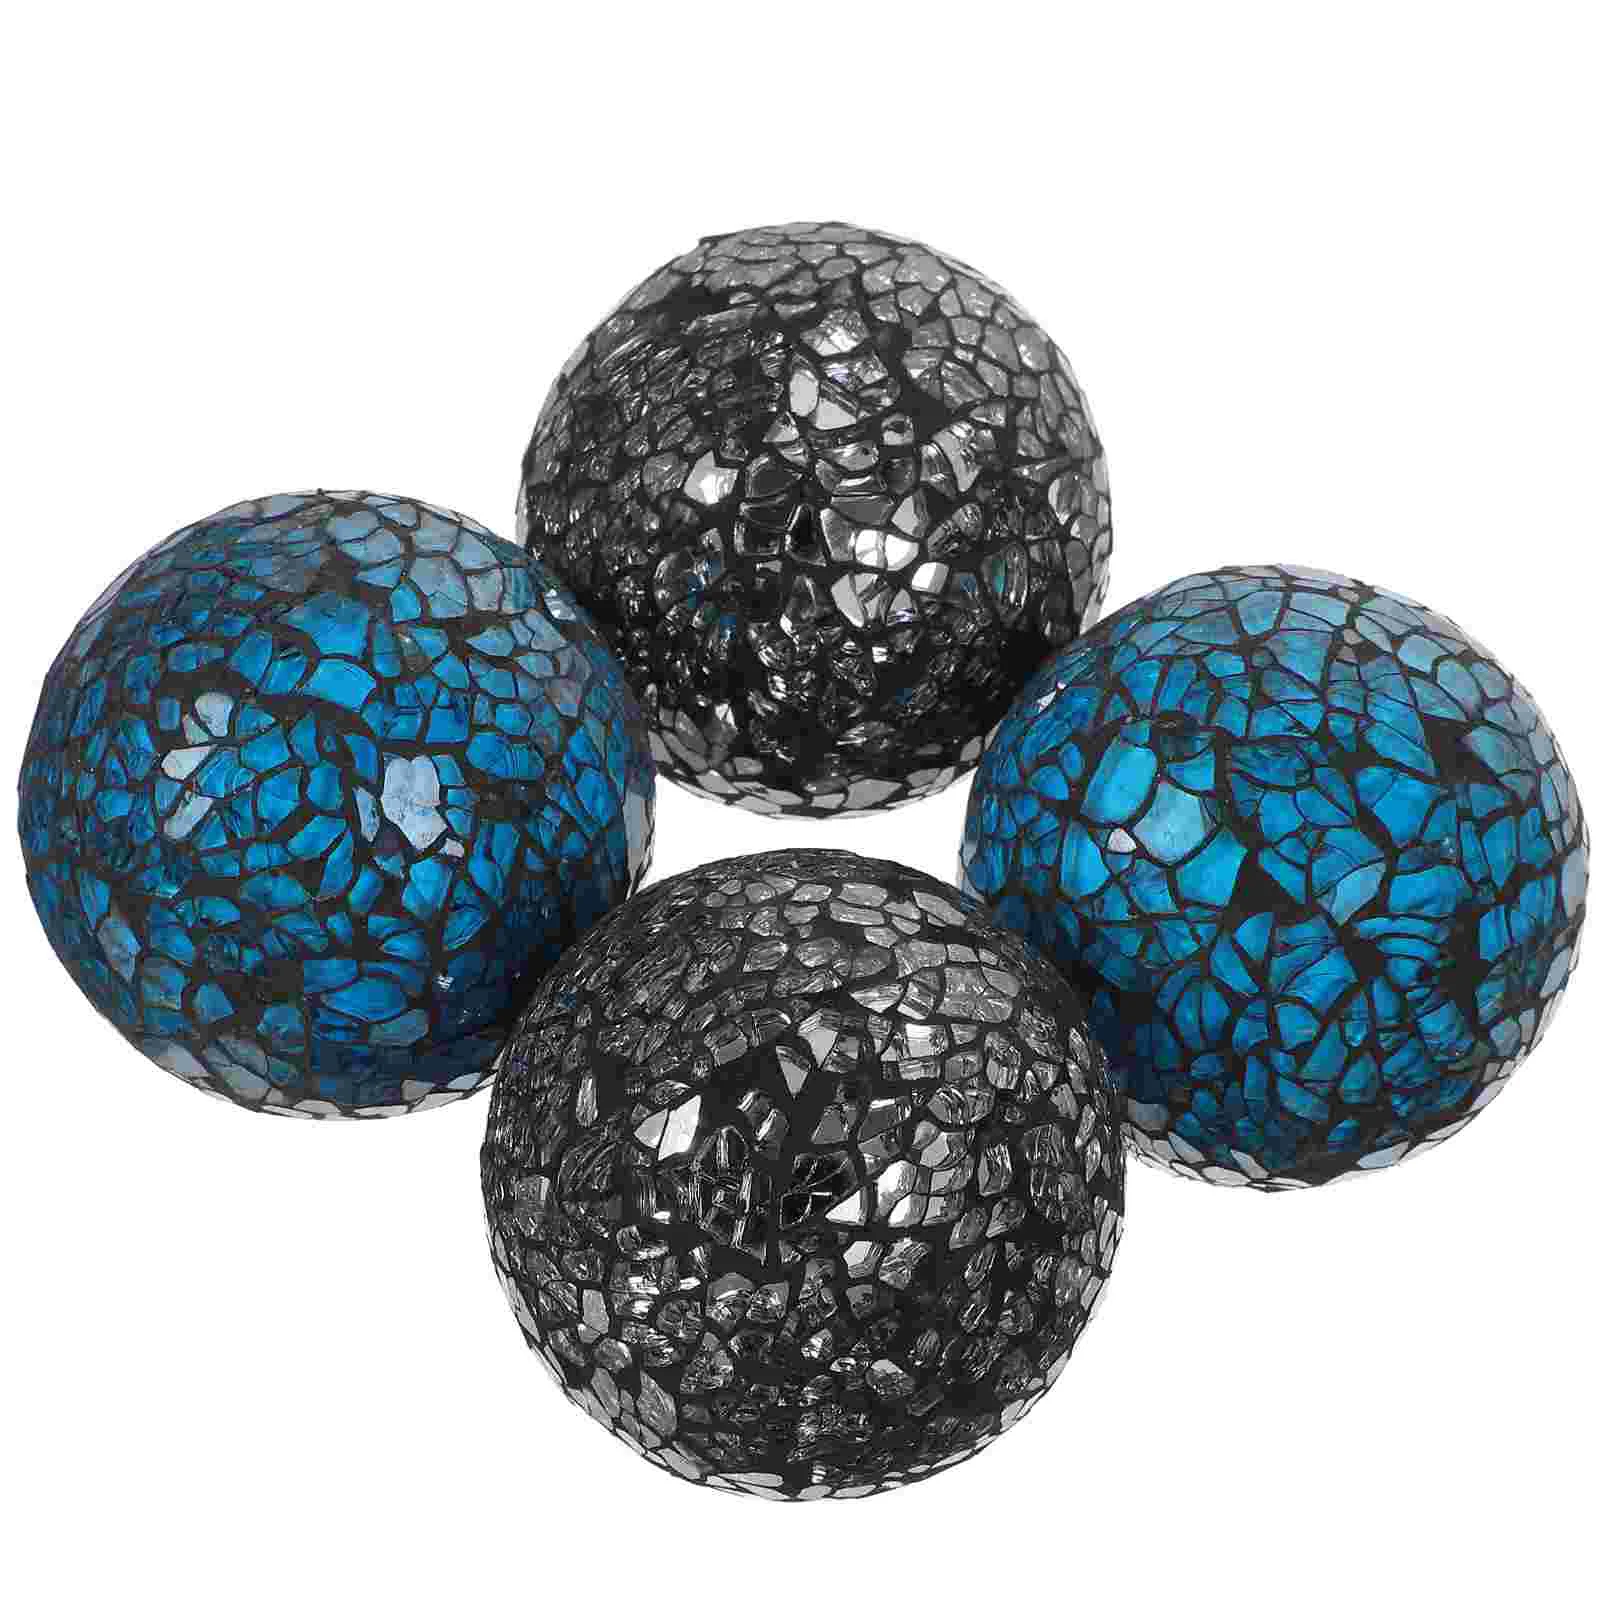 

4 Pcs Mosaic Ball Home Accessories Decorate Ornament Tabletop Desktop Glass Sphere